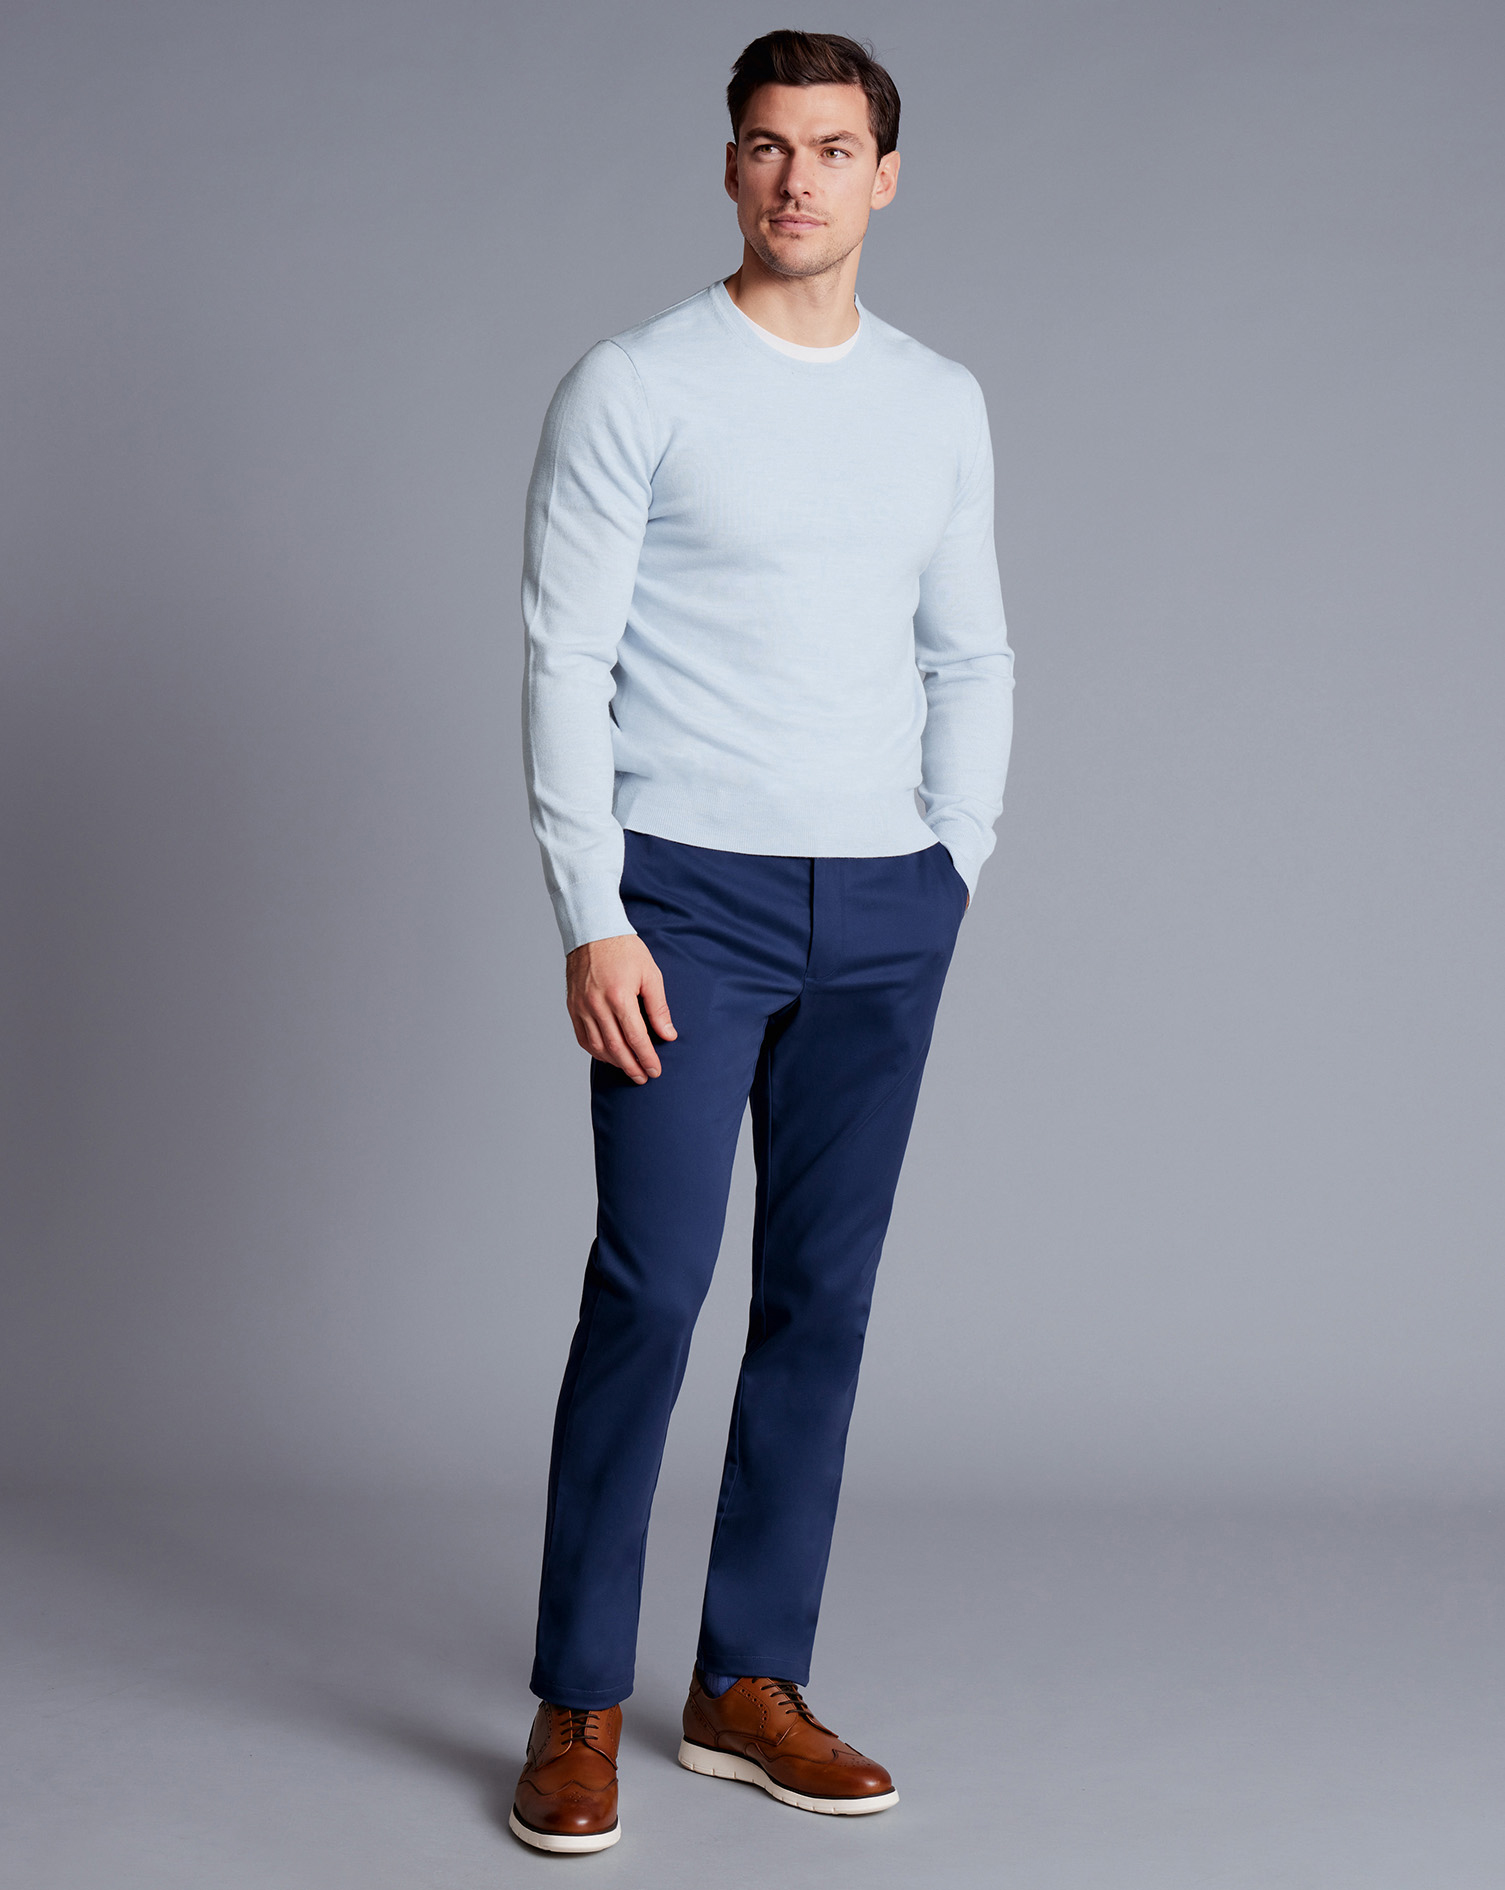 Men's Charles Tyrwhitt Ultimate Non-Iron Chino Pants - Royal Blue Size W38 L38 Cotton
